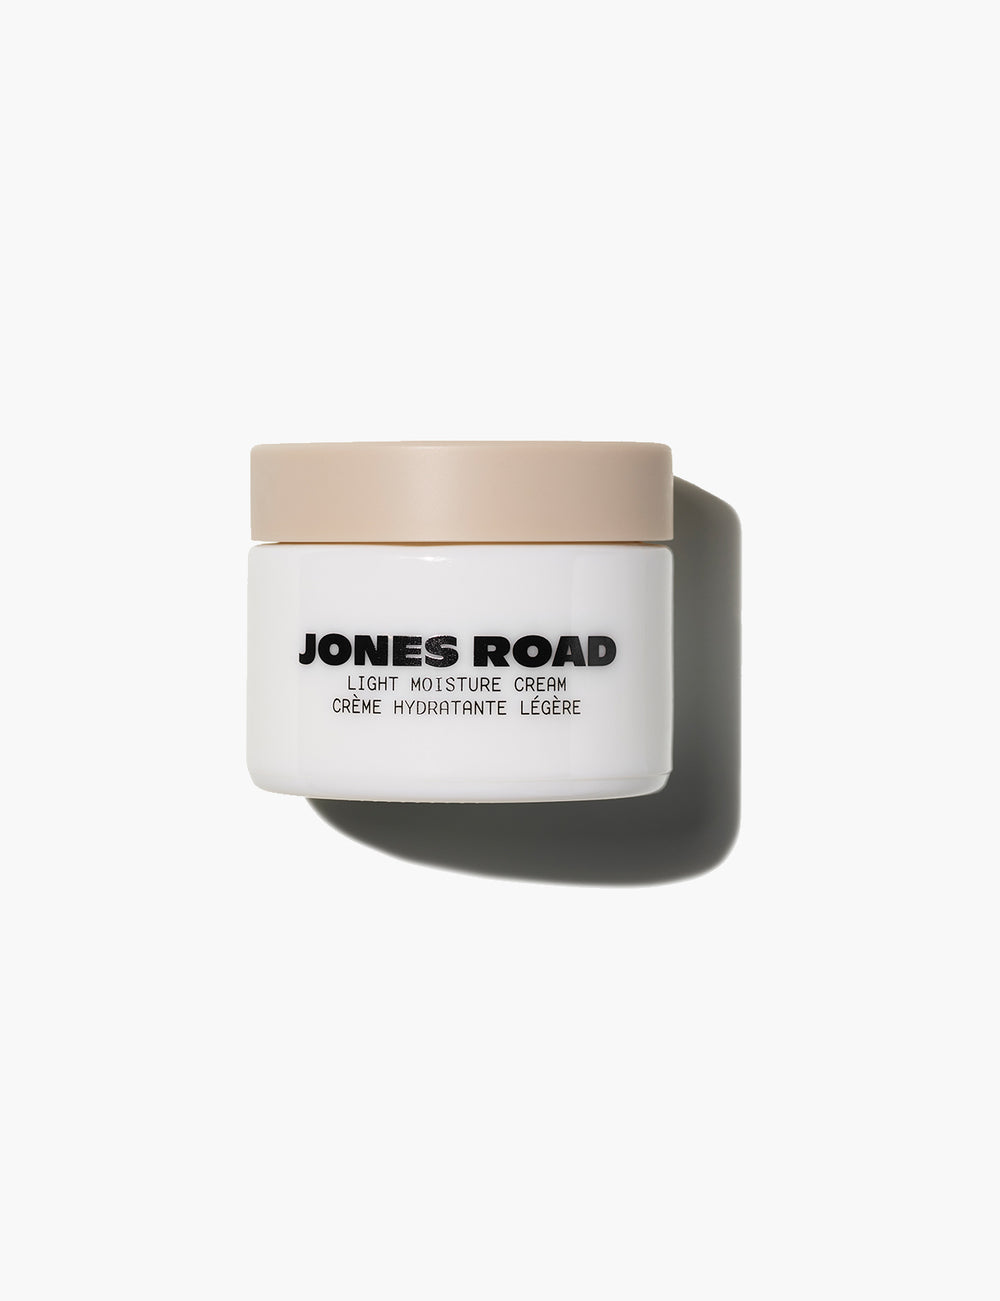 Jones Road Beauty's Light Moisture Cream